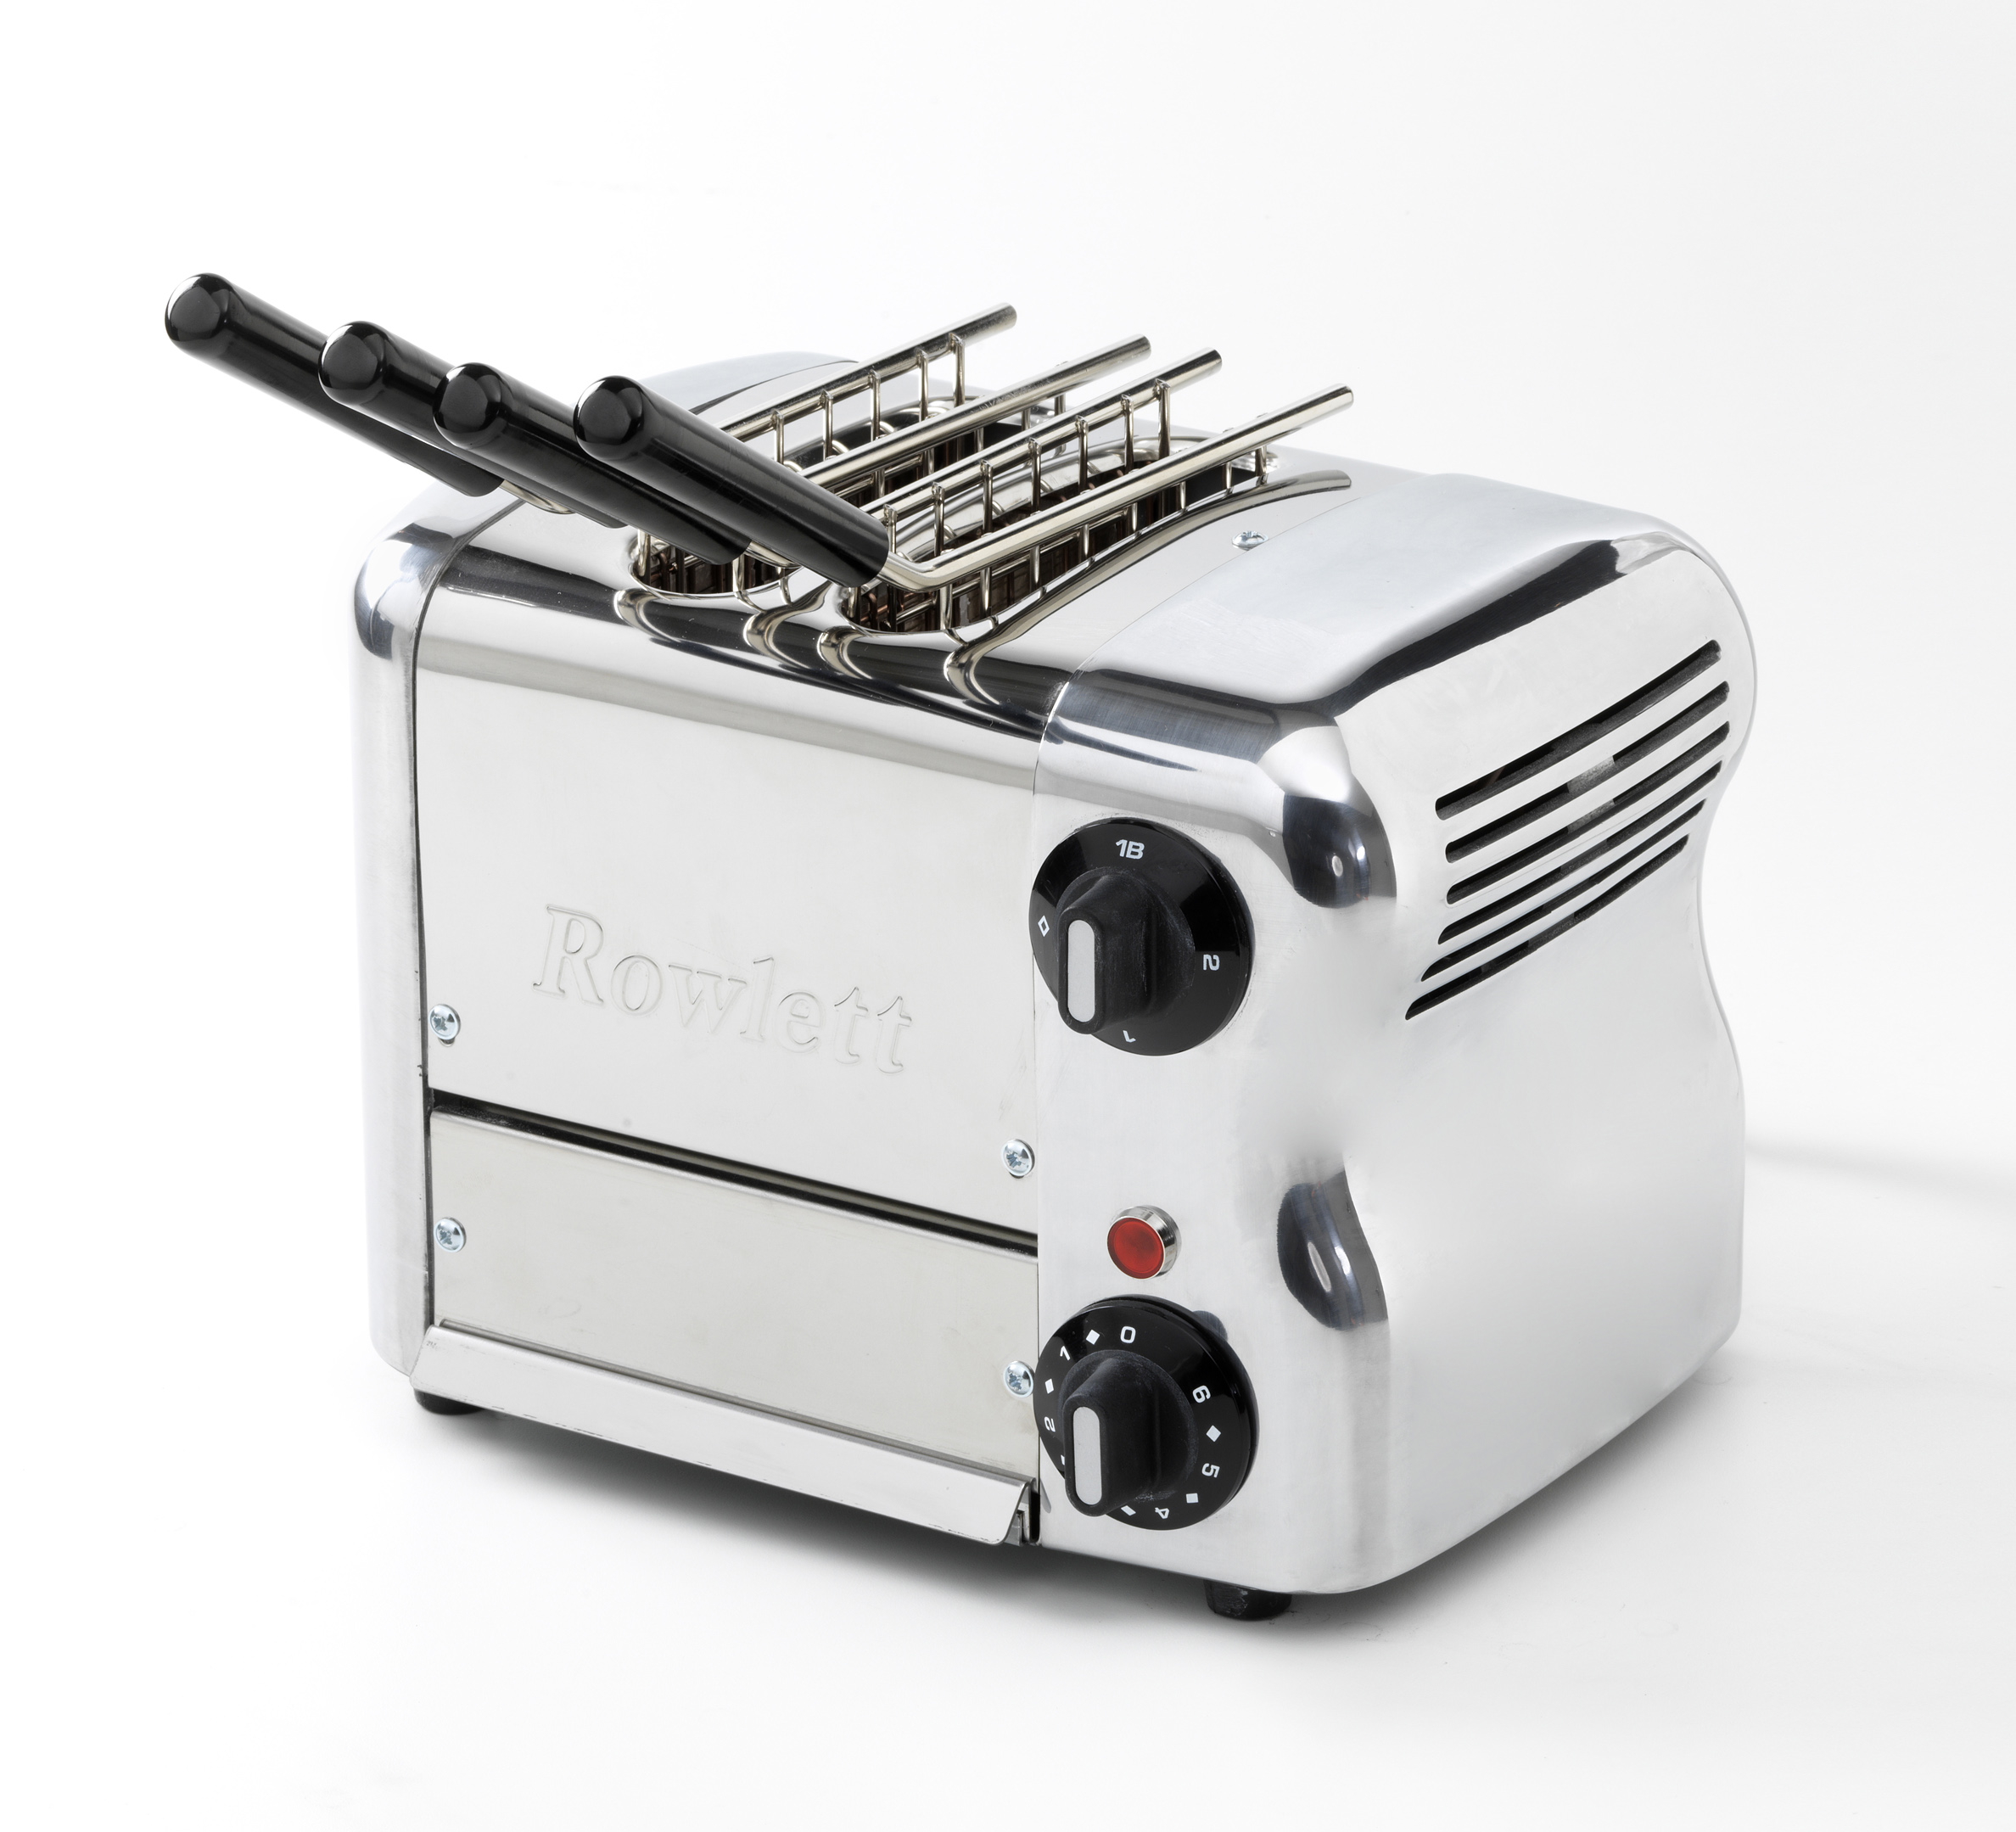 New Parts 12 Slot Slice Rowlett Rutland Toaster Heating 13 Elements Full Set 